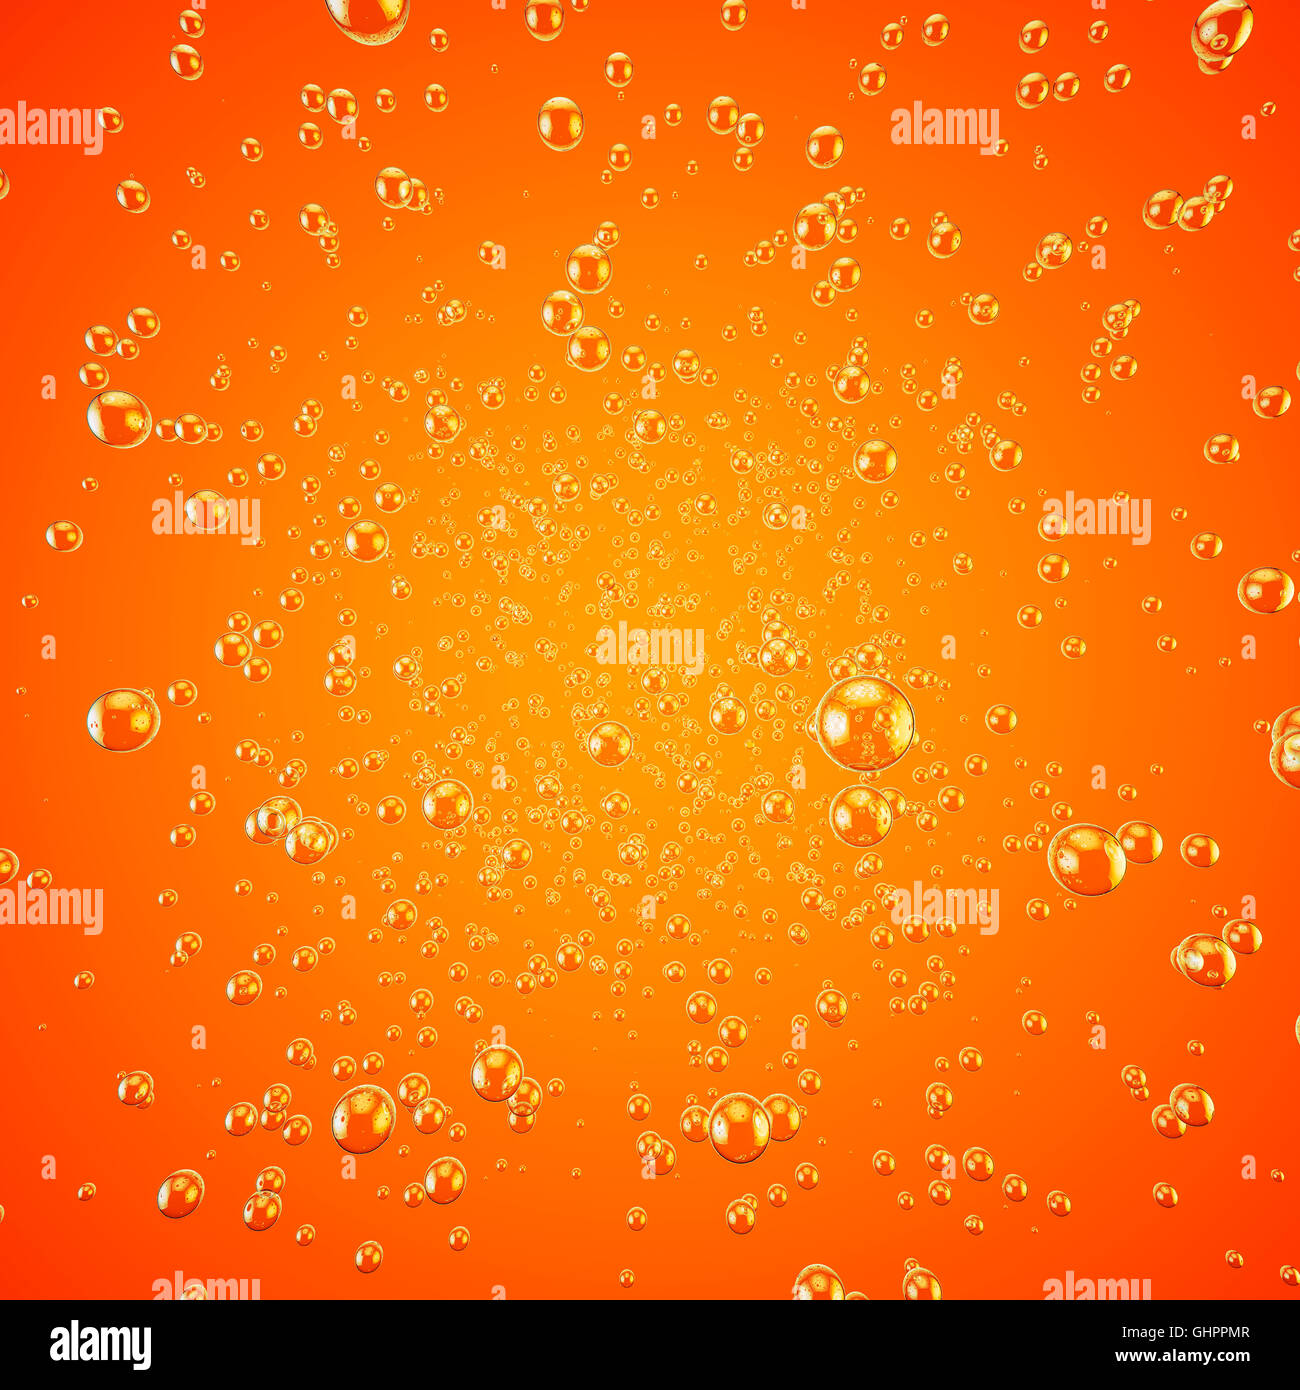 Orange soda bubbles background / 3D illustration of sunny bubbles Stock Photo